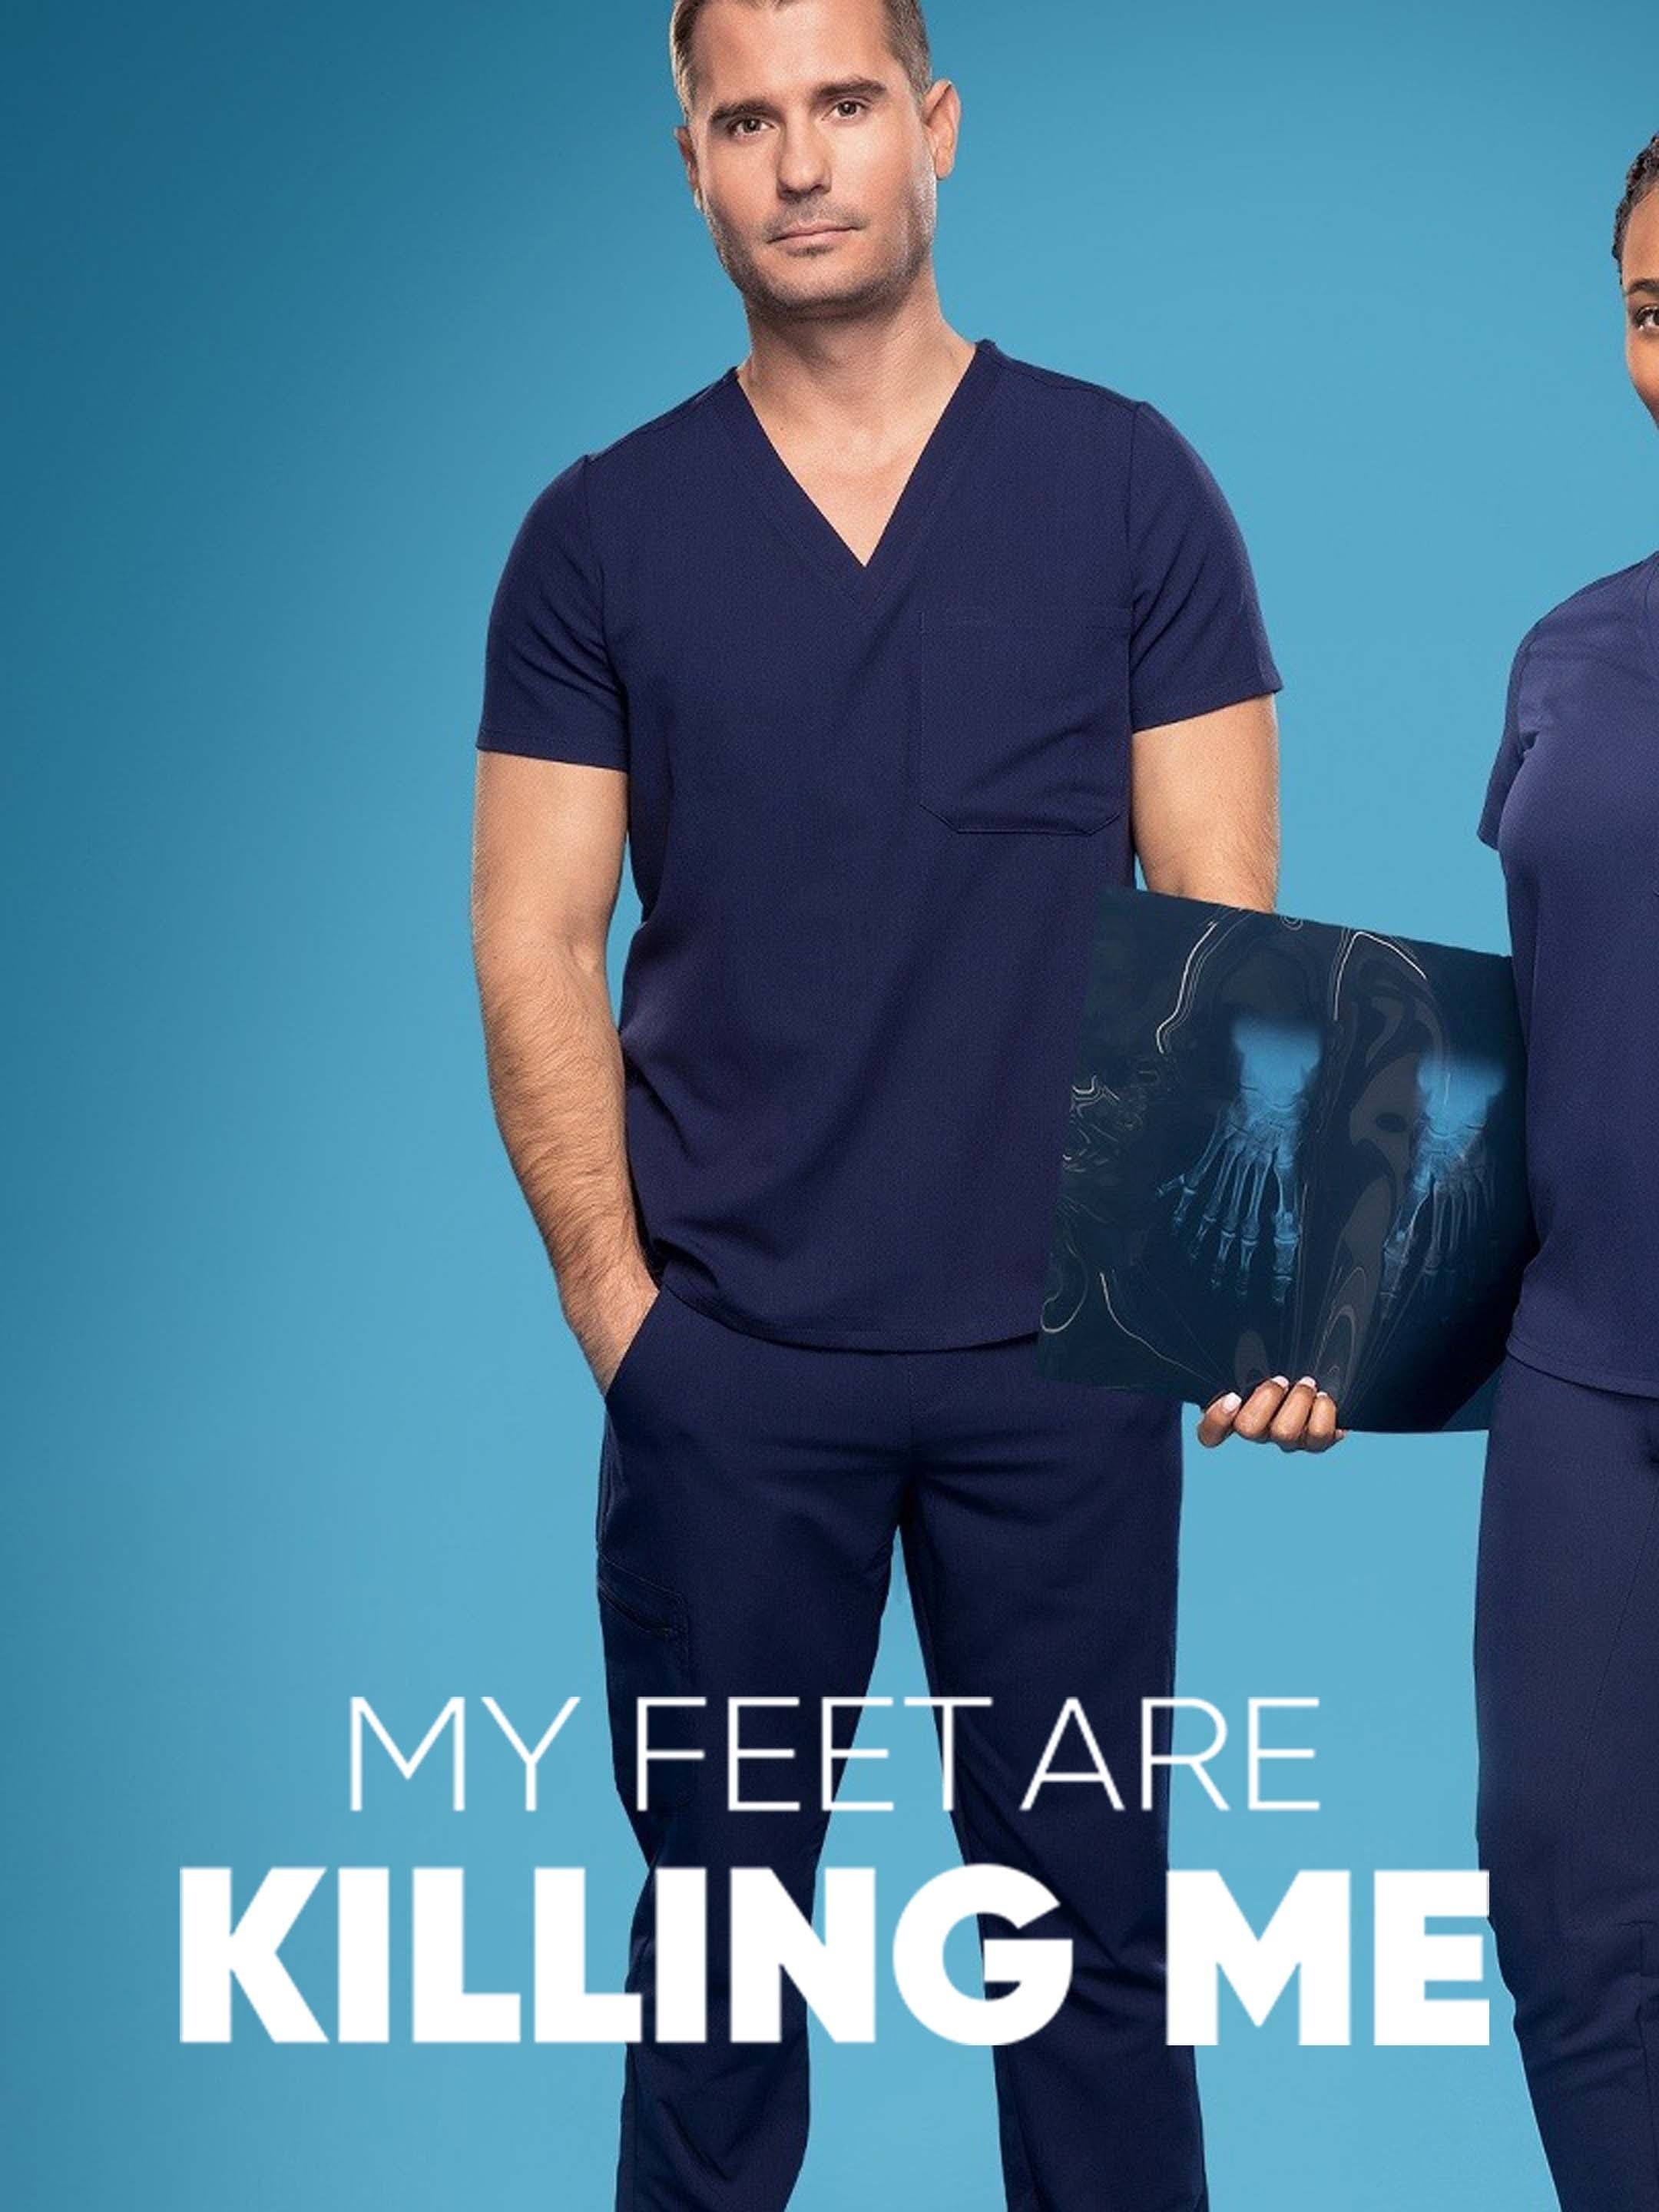 Watch My Feet are Killing Me season 4 episode 3 streaming online